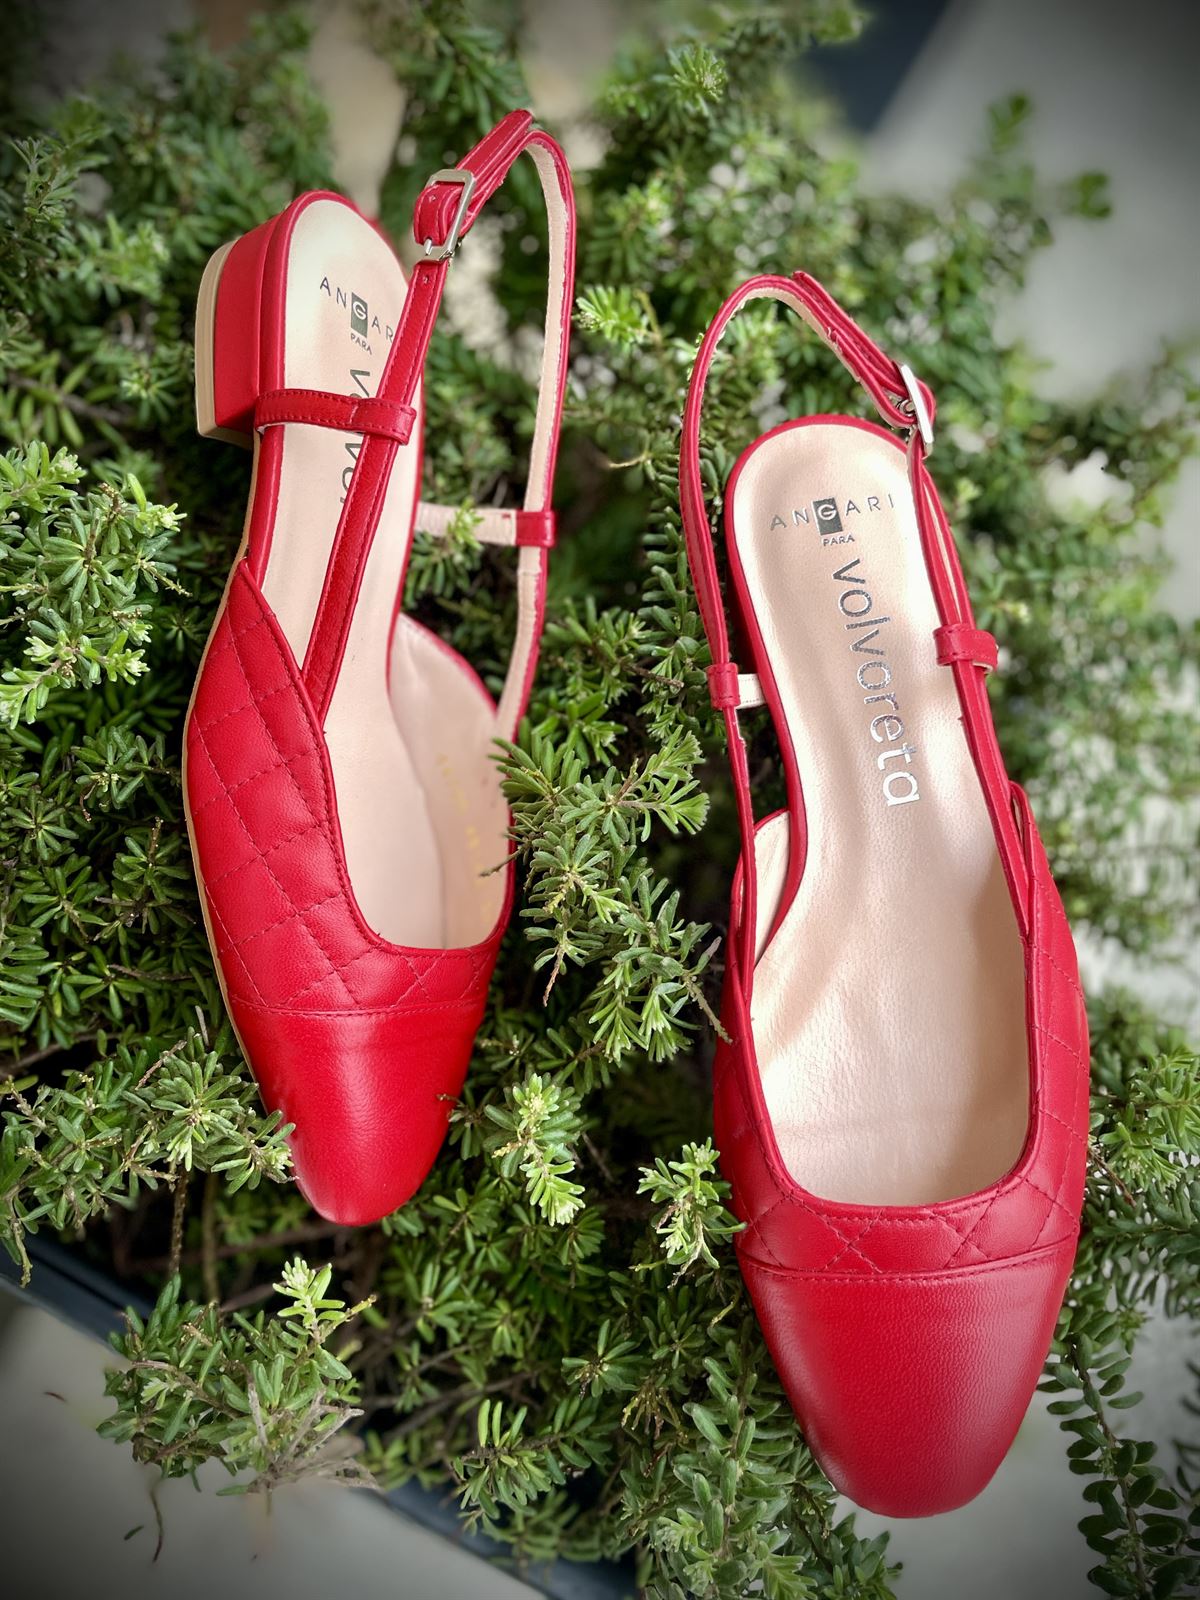 Zapatos Angari bailarinas puntera roja - Imagen 2